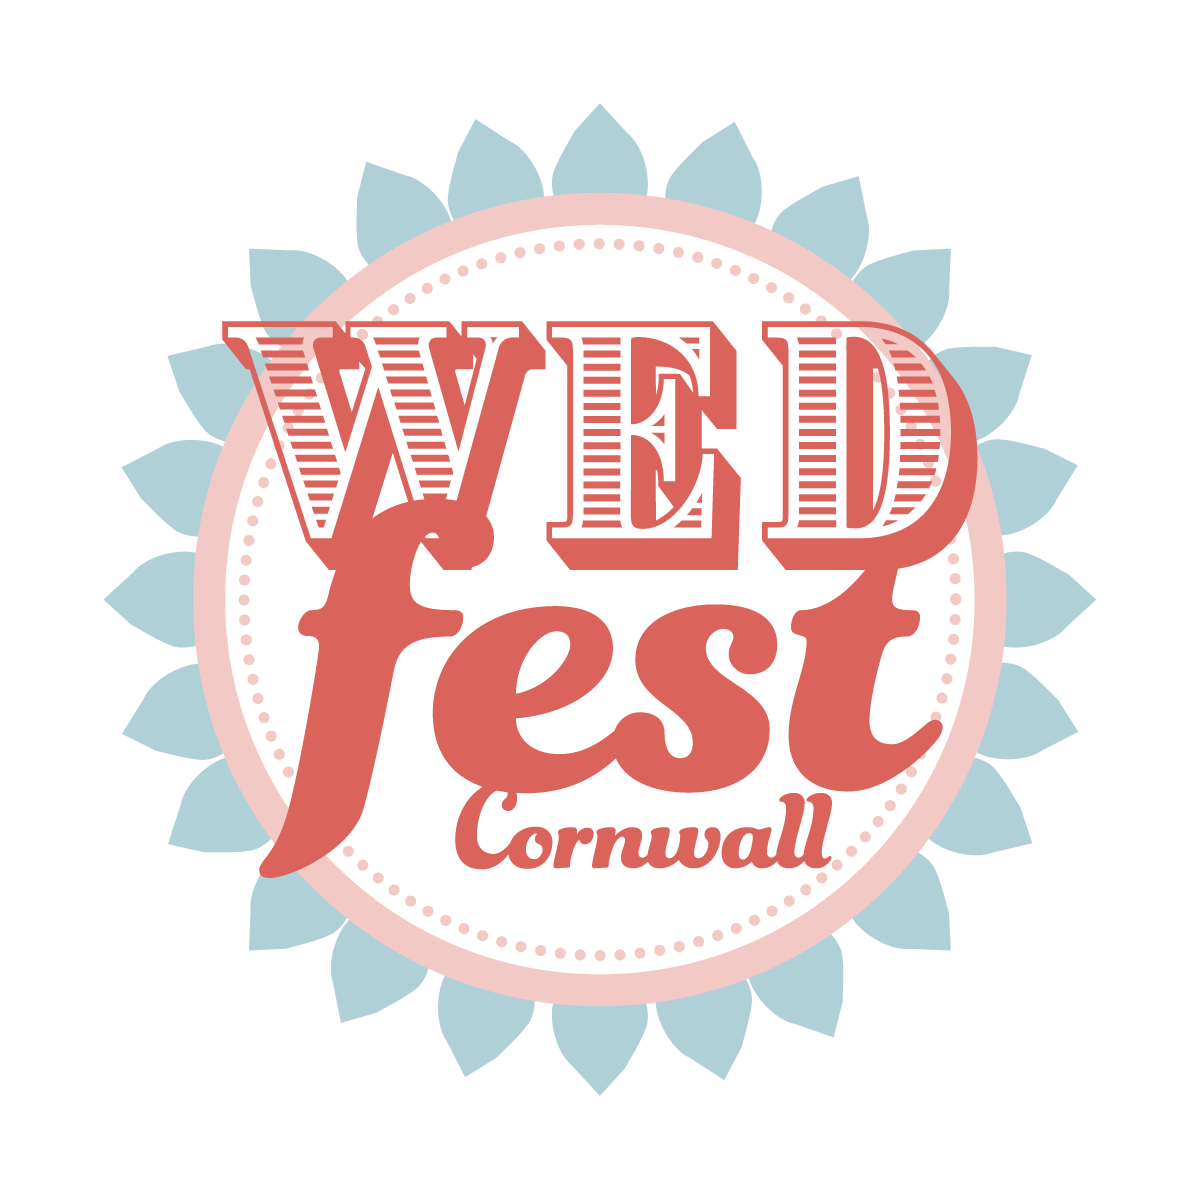 Wedfest Cornwall